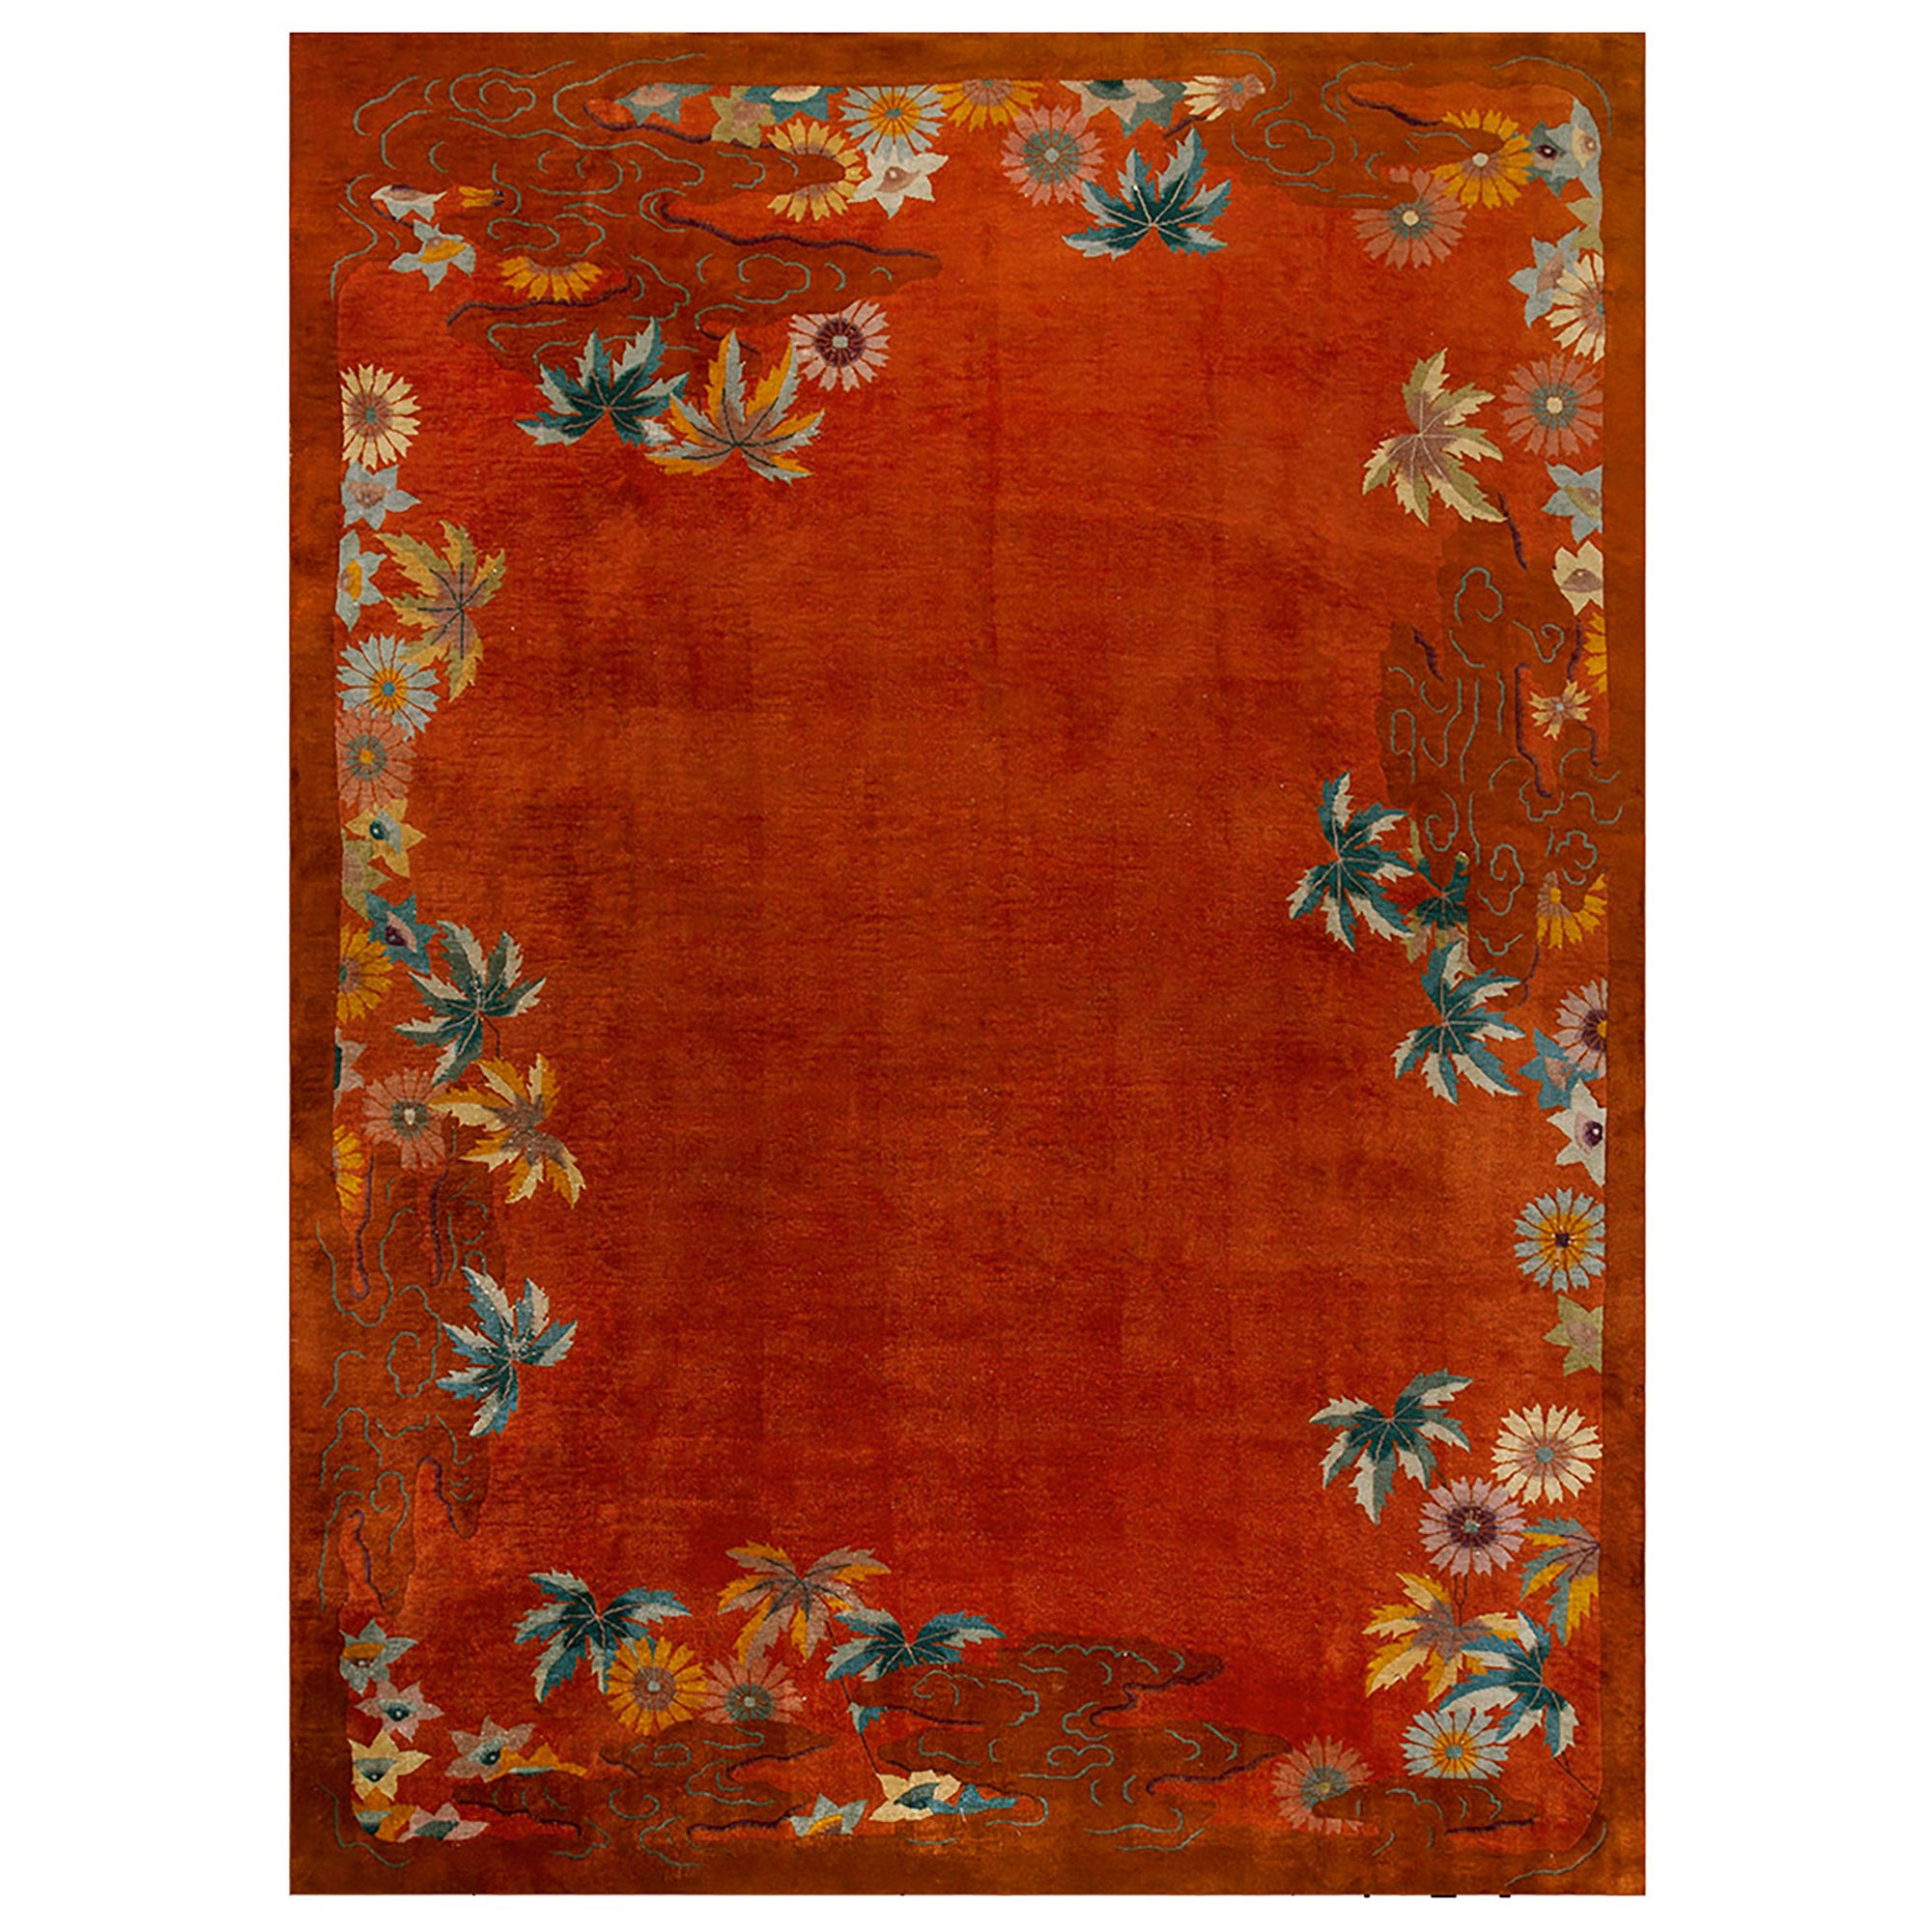 1920s Chinese Art Deco Carpet ( 9'9" x 13'3" - 297 x 404 )